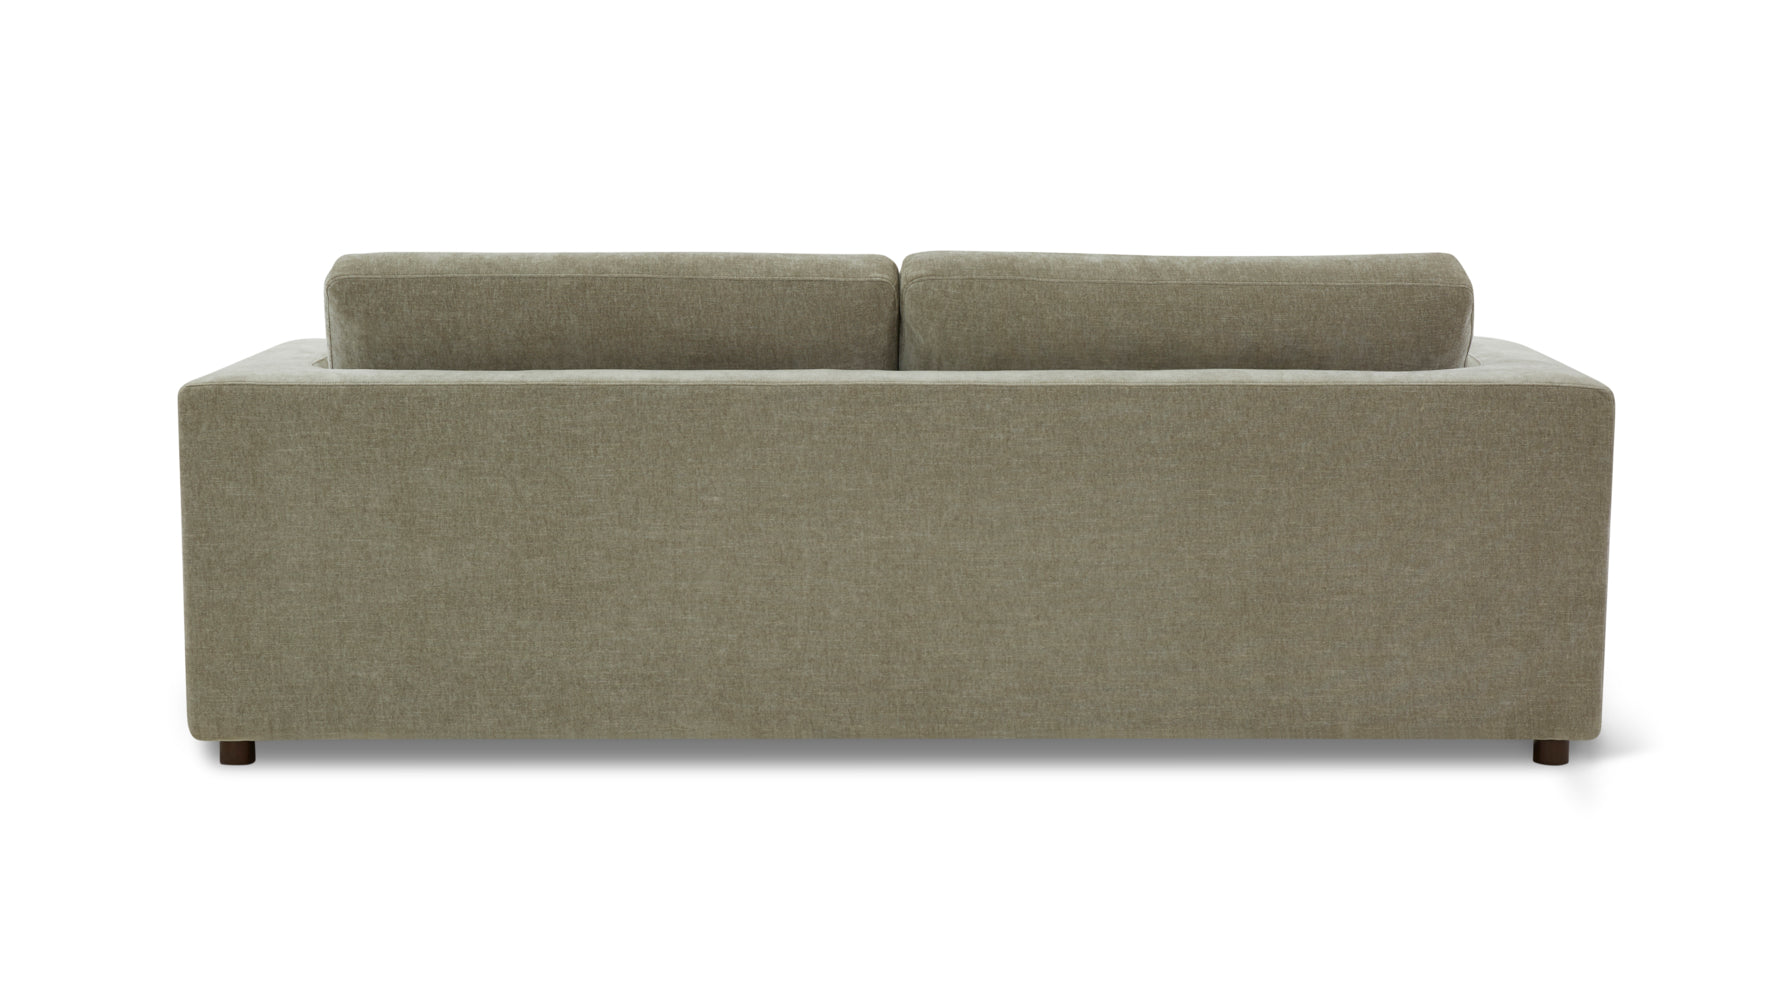 Good Company Sofa, 3 Seater, Artichoke - Image 4